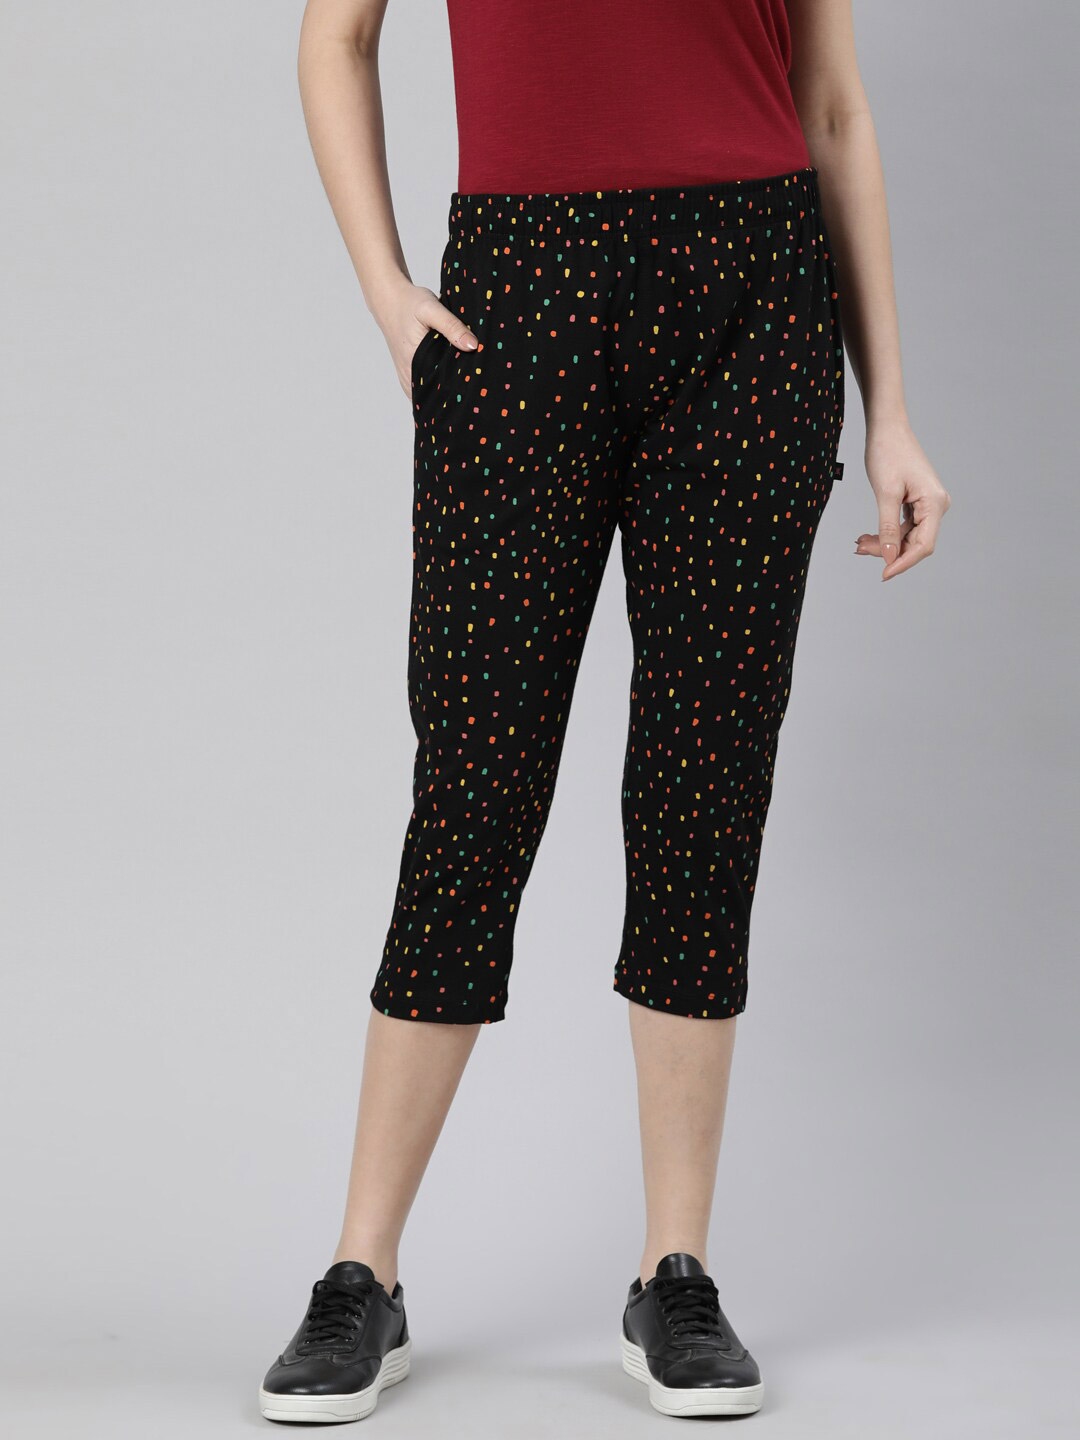 Buy online Pack Of 3 Multi Colored Capri Leggings from Capris & Leggings  for Women by Gracit for ₹699 at 77% off